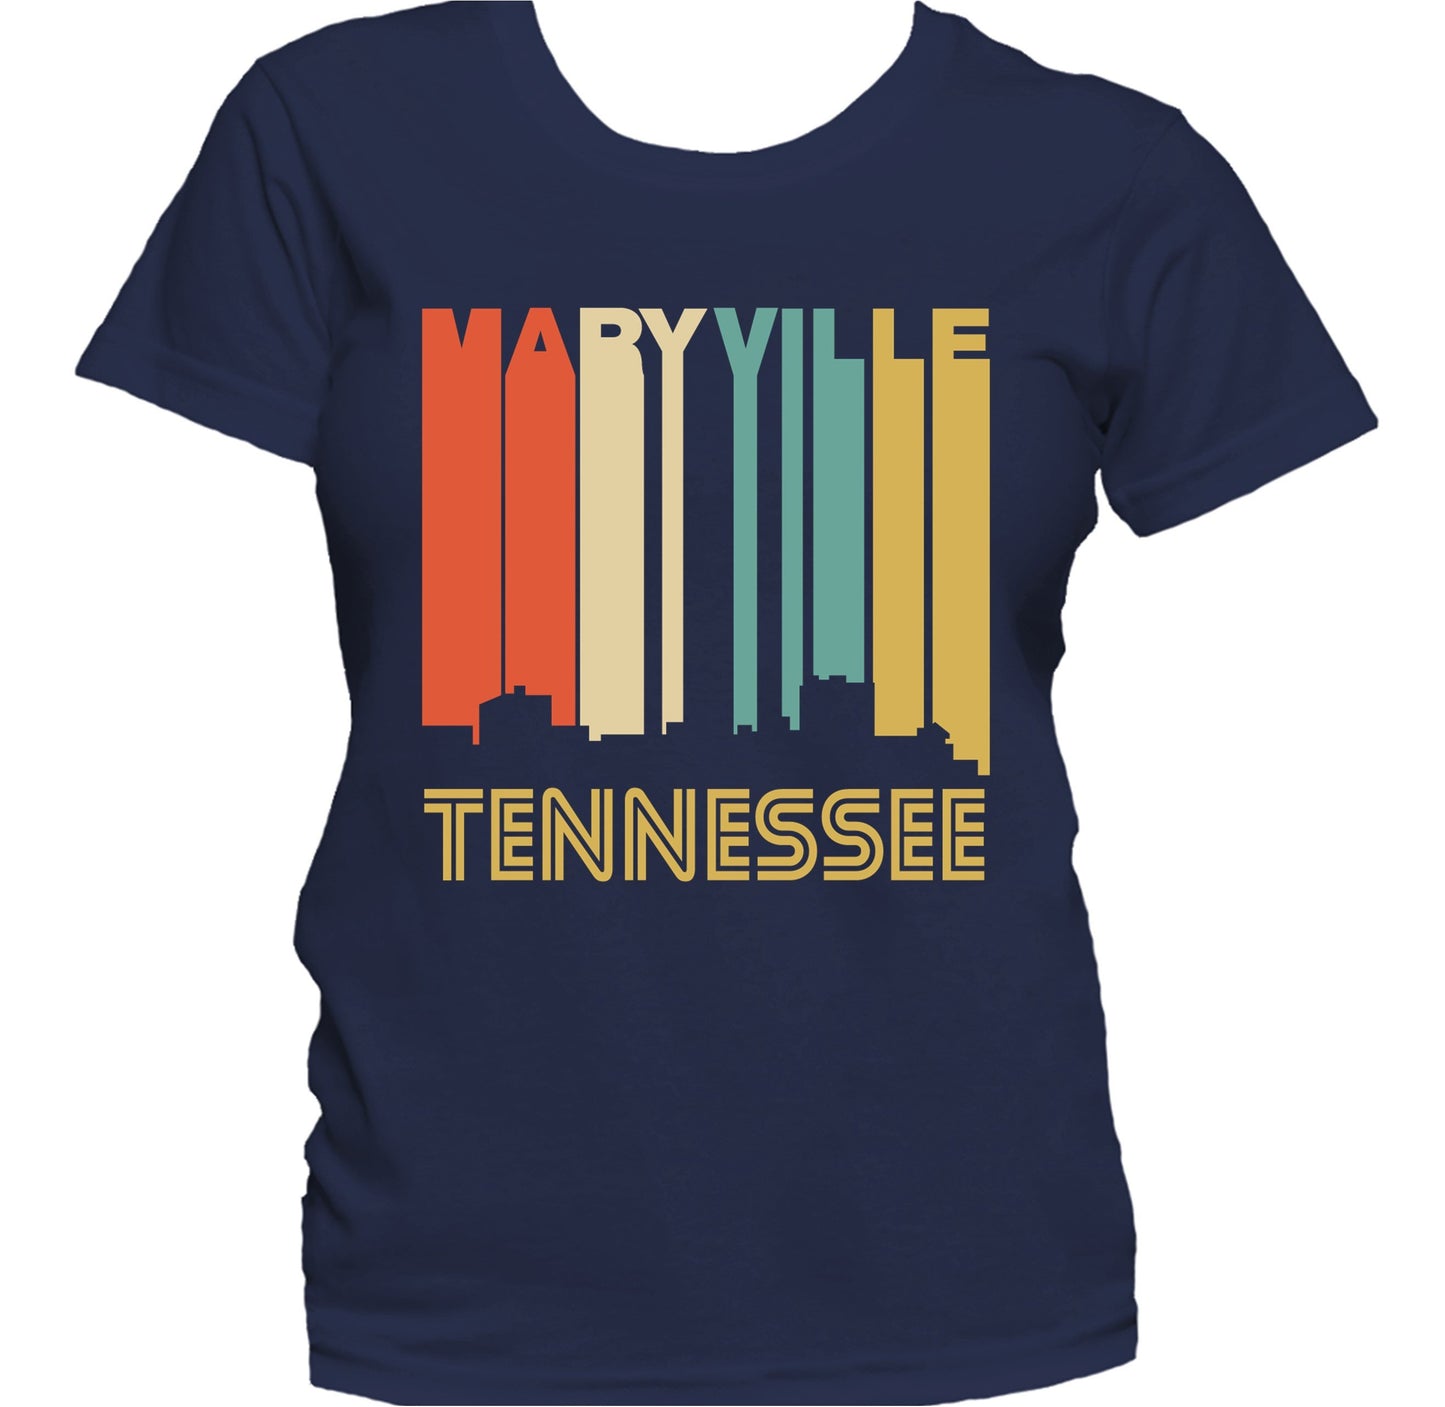 Retro 1970's Style Maryville Tennessee Skyline Women's T-Shirt